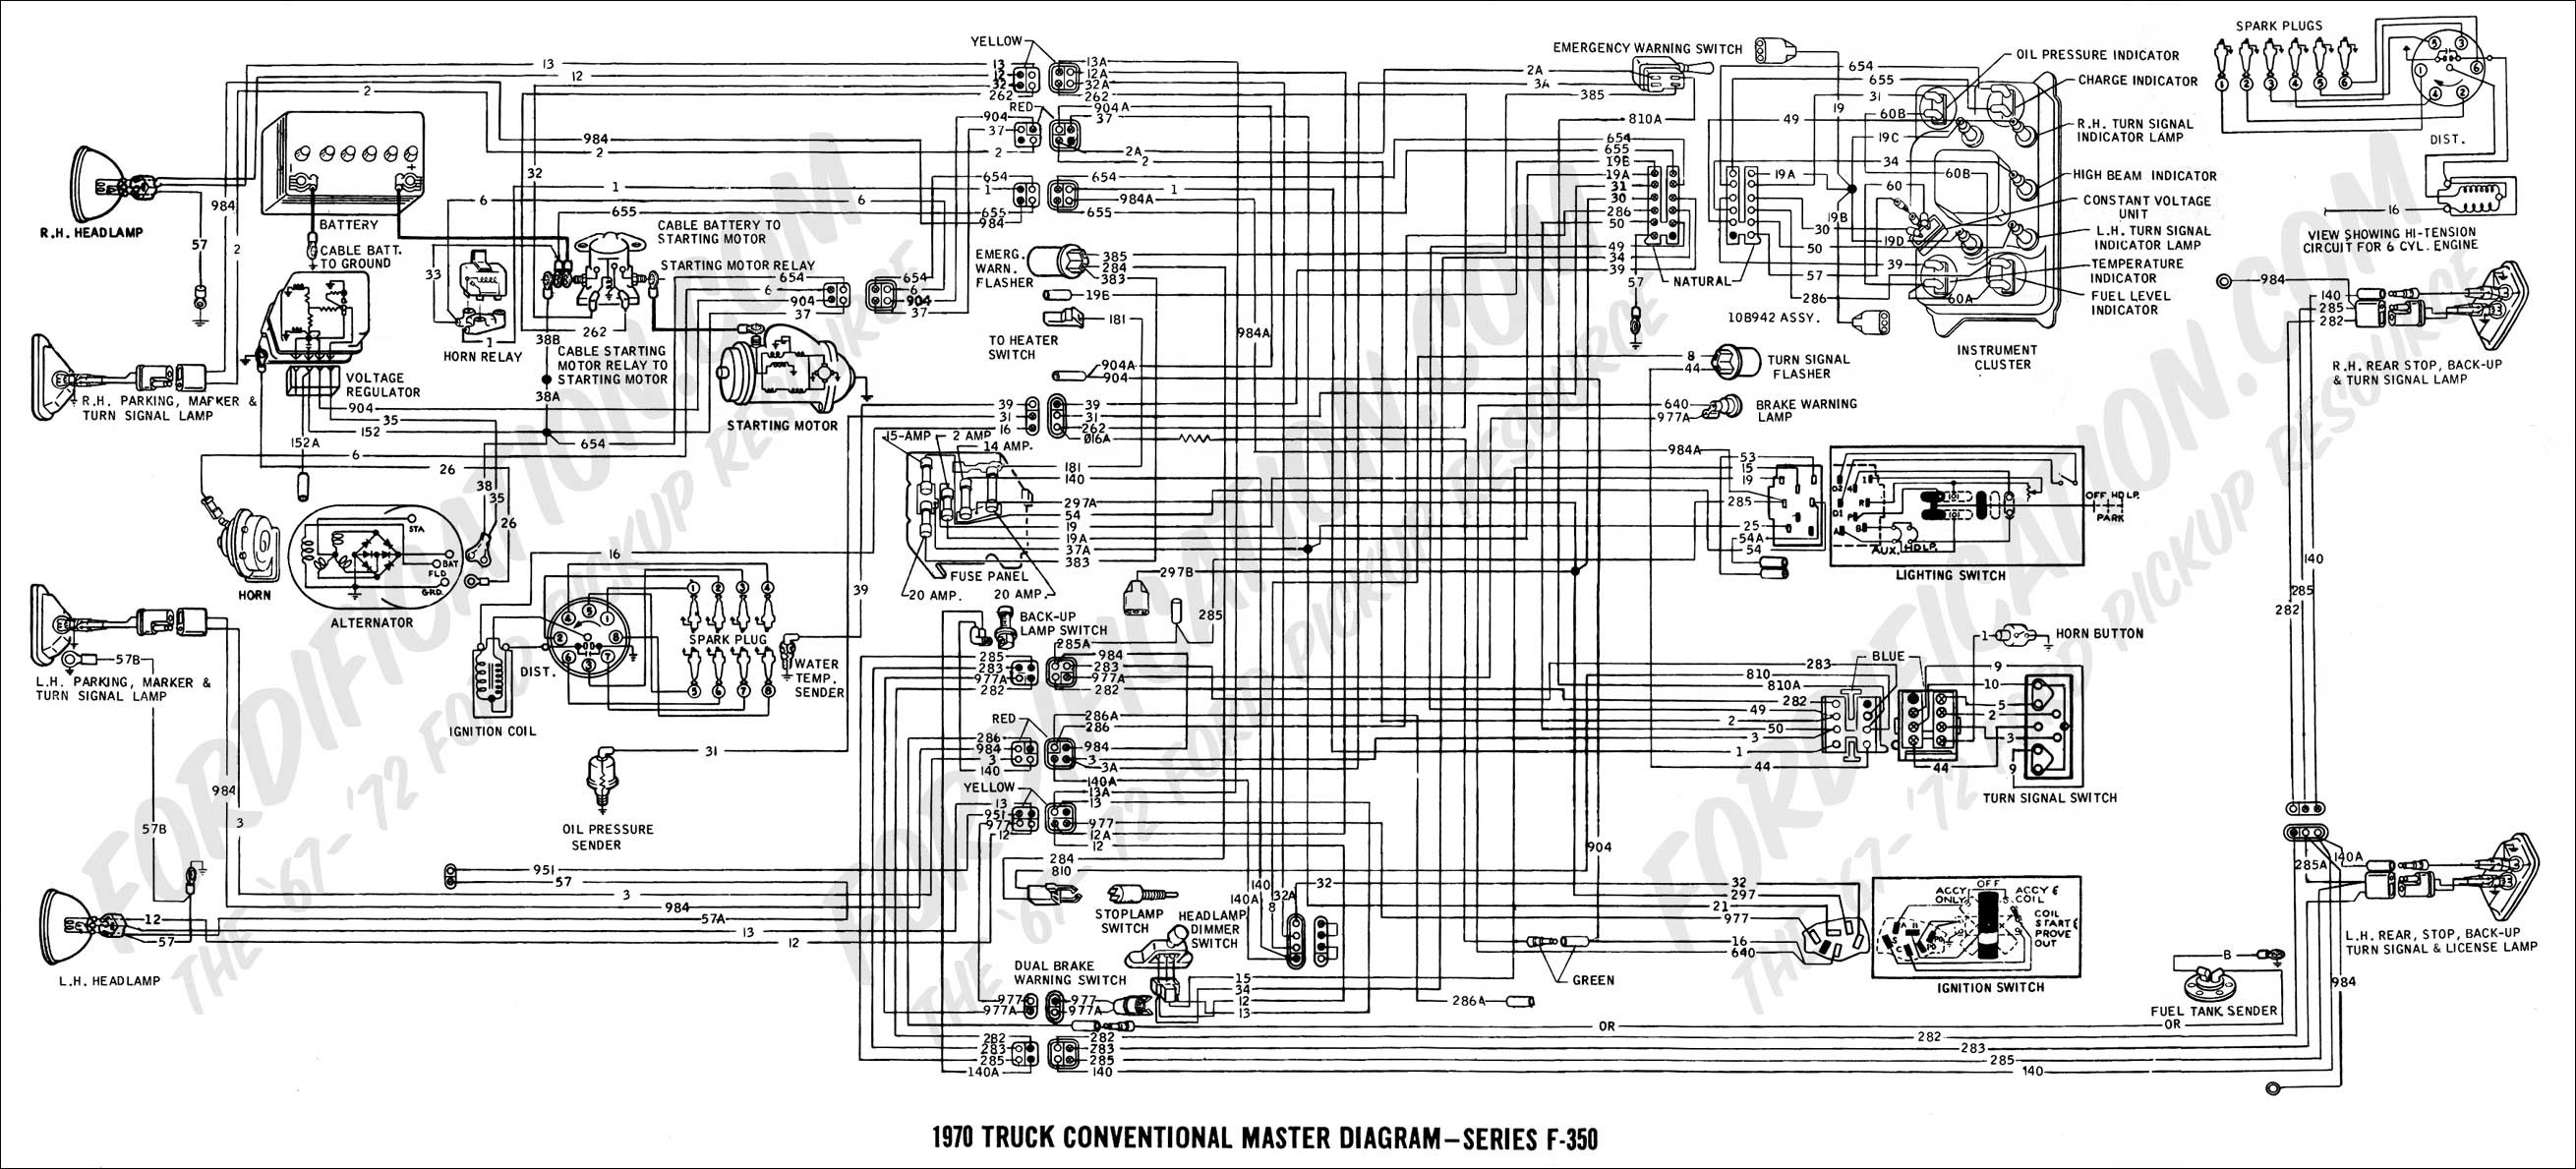 2002 Ford F250 Wiring Diagram from detoxicrecenze.com